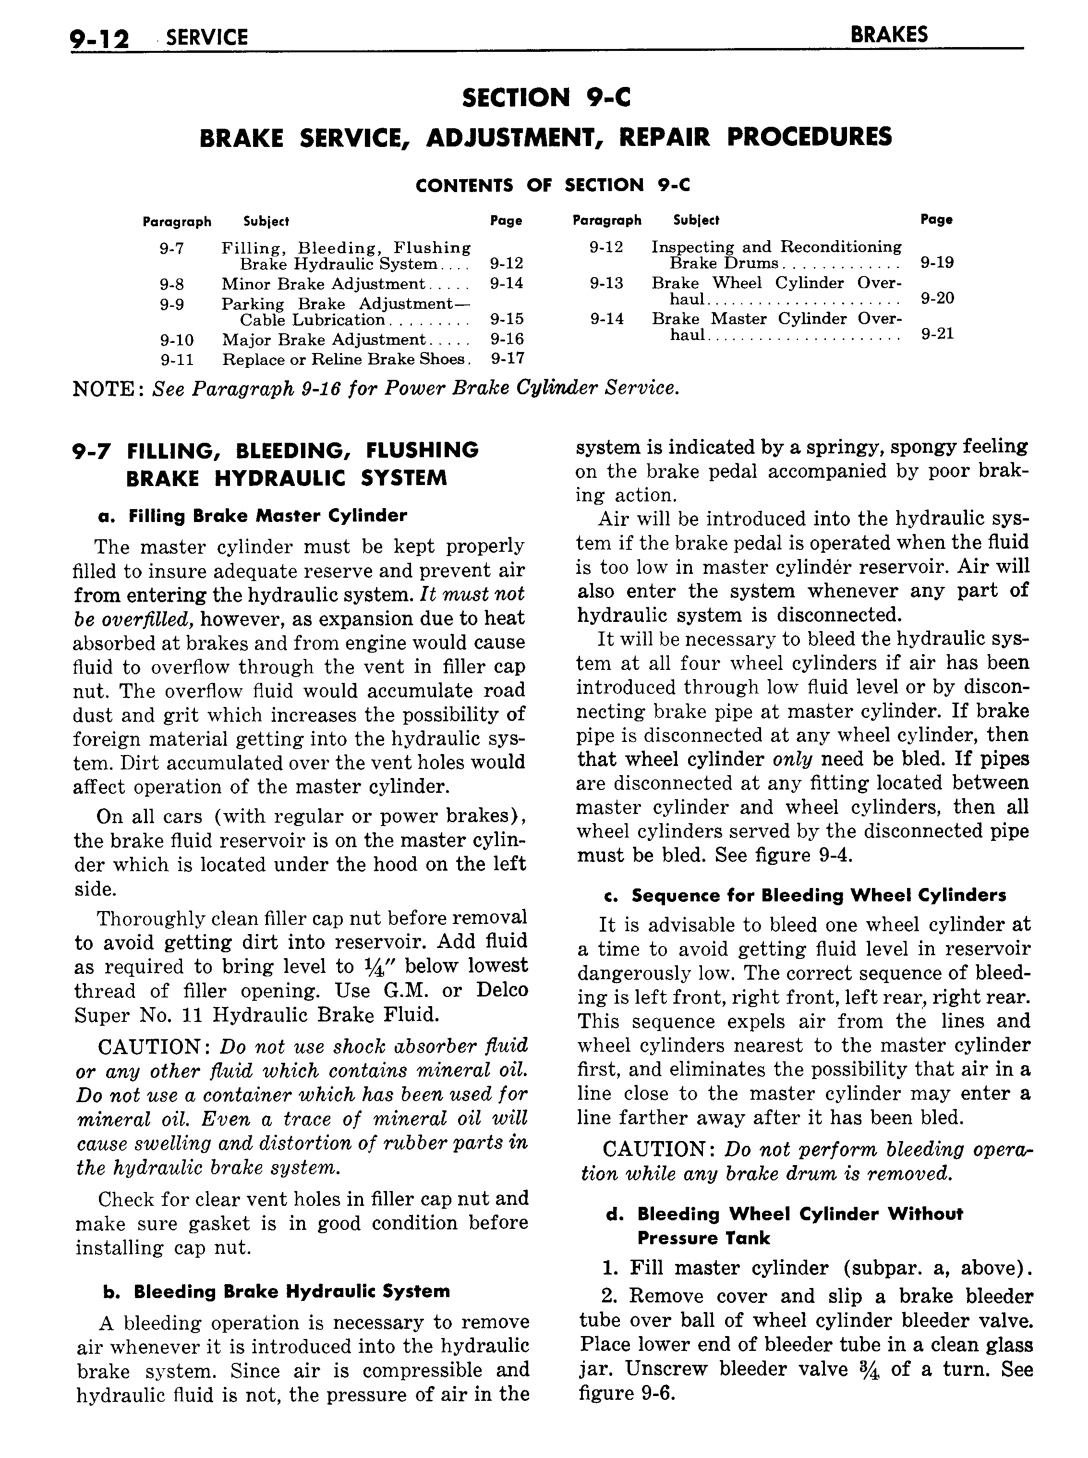 n_10 1957 Buick Shop Manual - Brakes-012-012.jpg